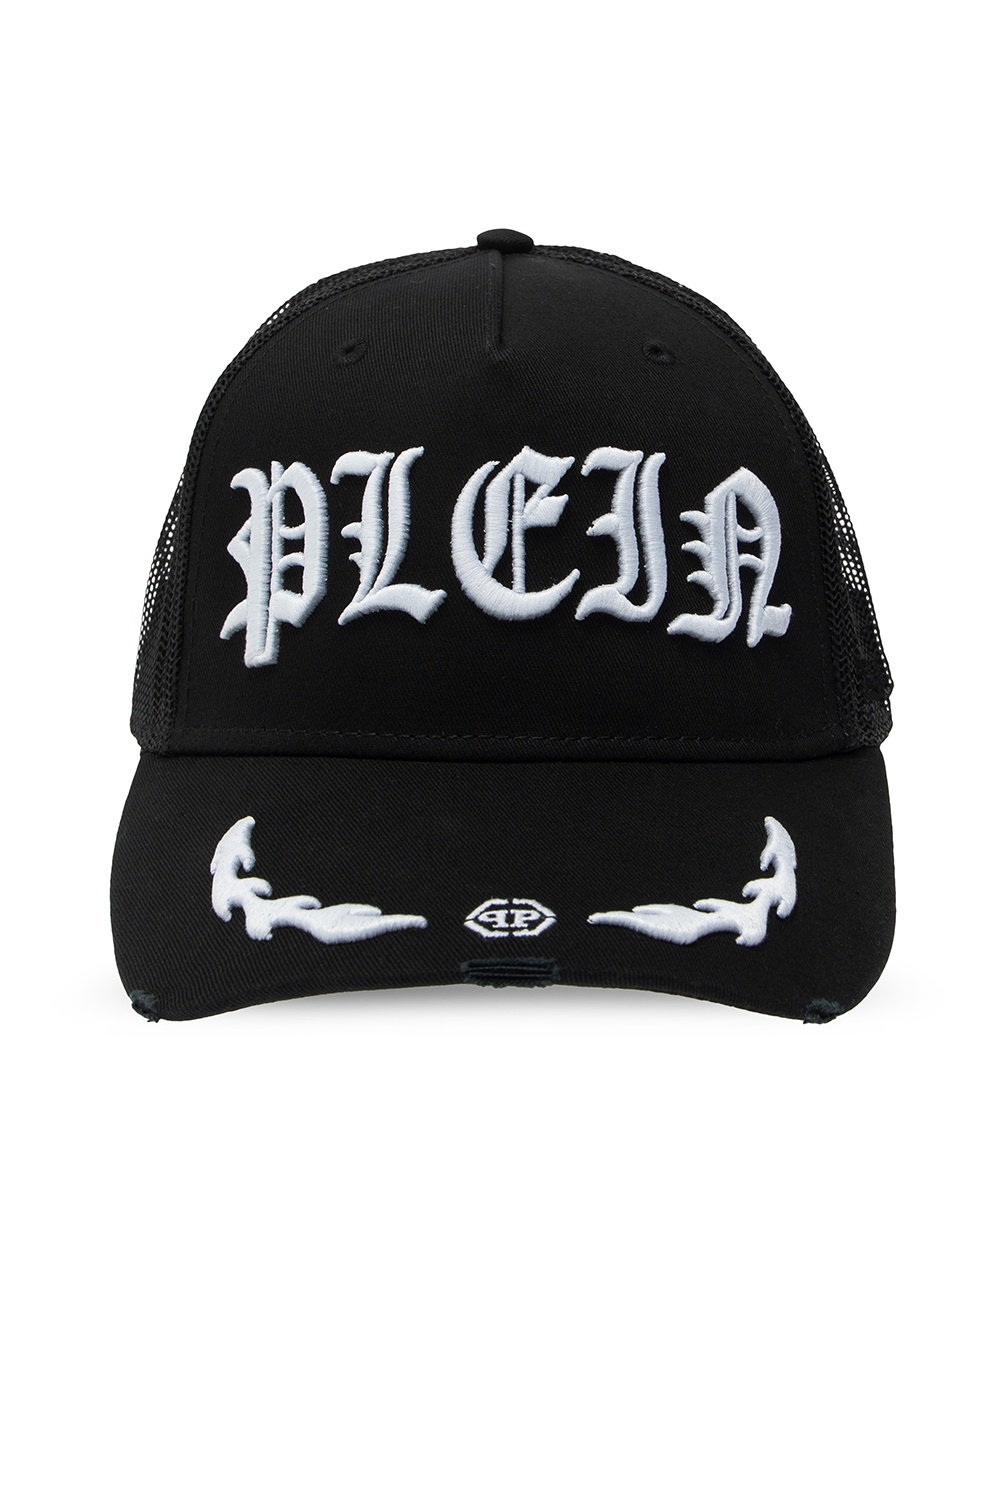 PHILIPP PLEIN Black/White Letters Baseball Cap Casual Adjustable Hats #PH015 